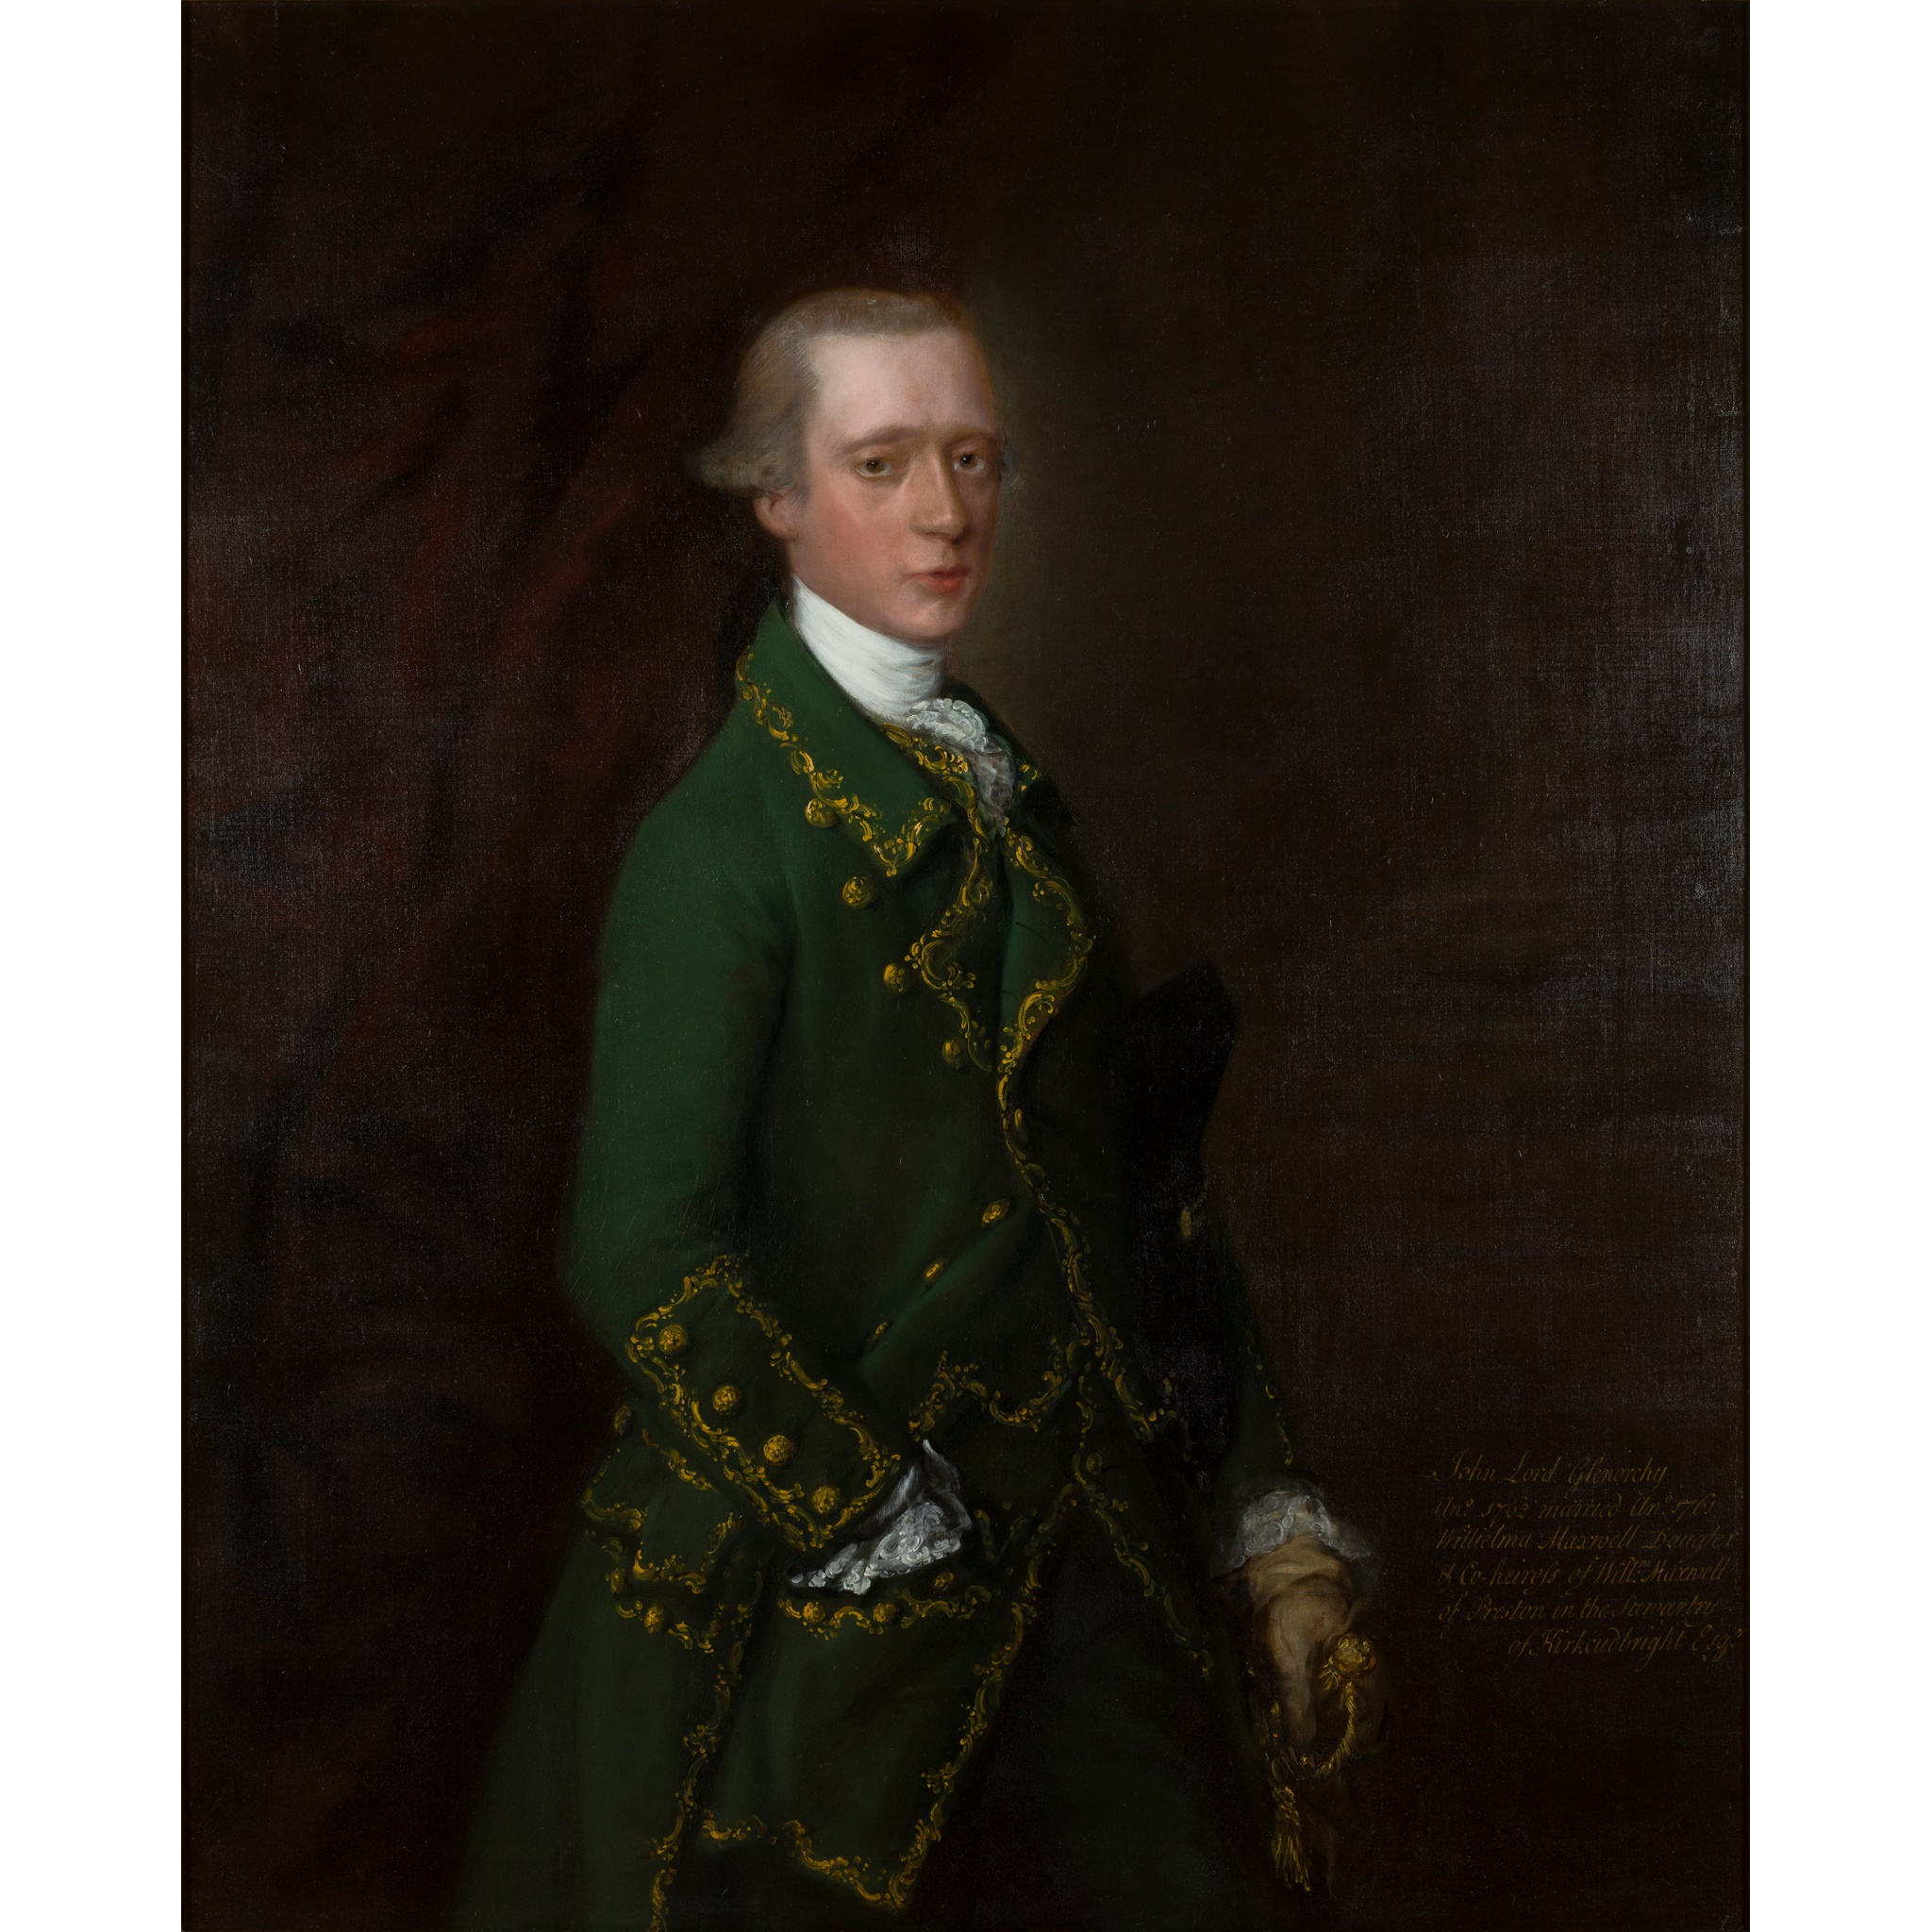 THOMAS GAINSBOROUGH R.A. (BRITISH 1717-1788) HALF-LENGTH PORTRAIT OF JOHN CAMPBELL, VISCOUNT GLENORCHY (1738-1771) - 1762-63